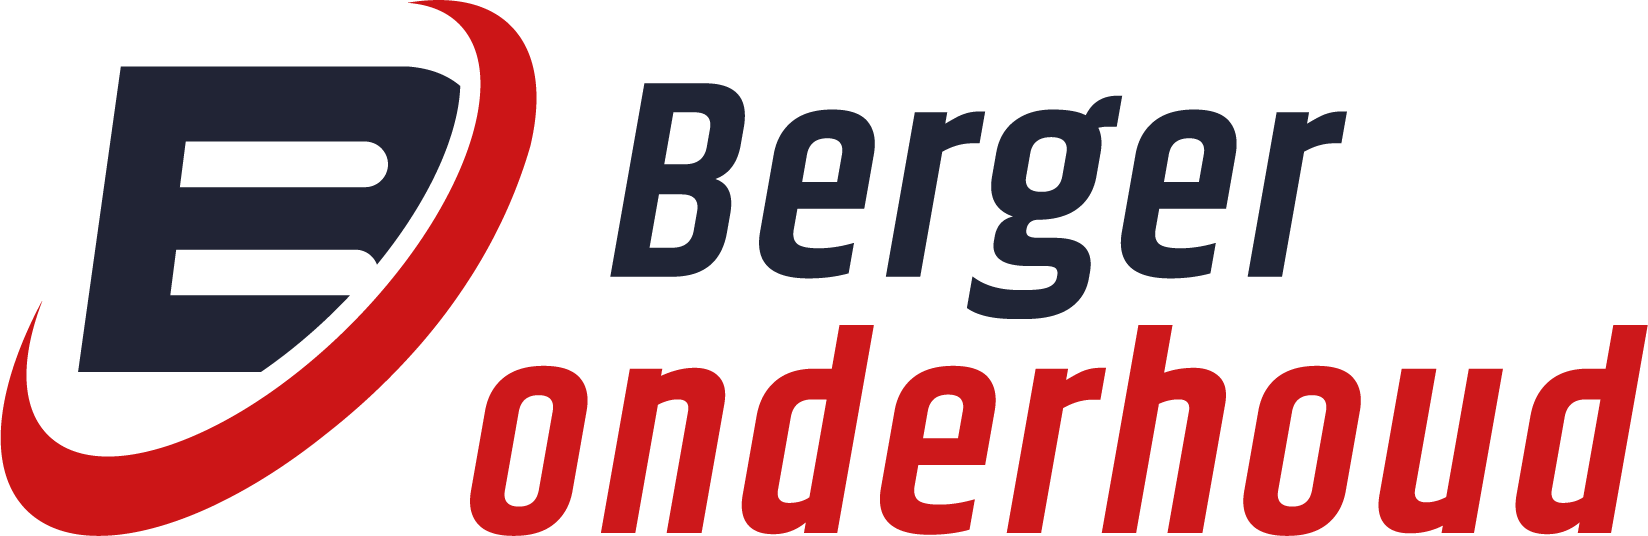 logo Berger Onderhoud